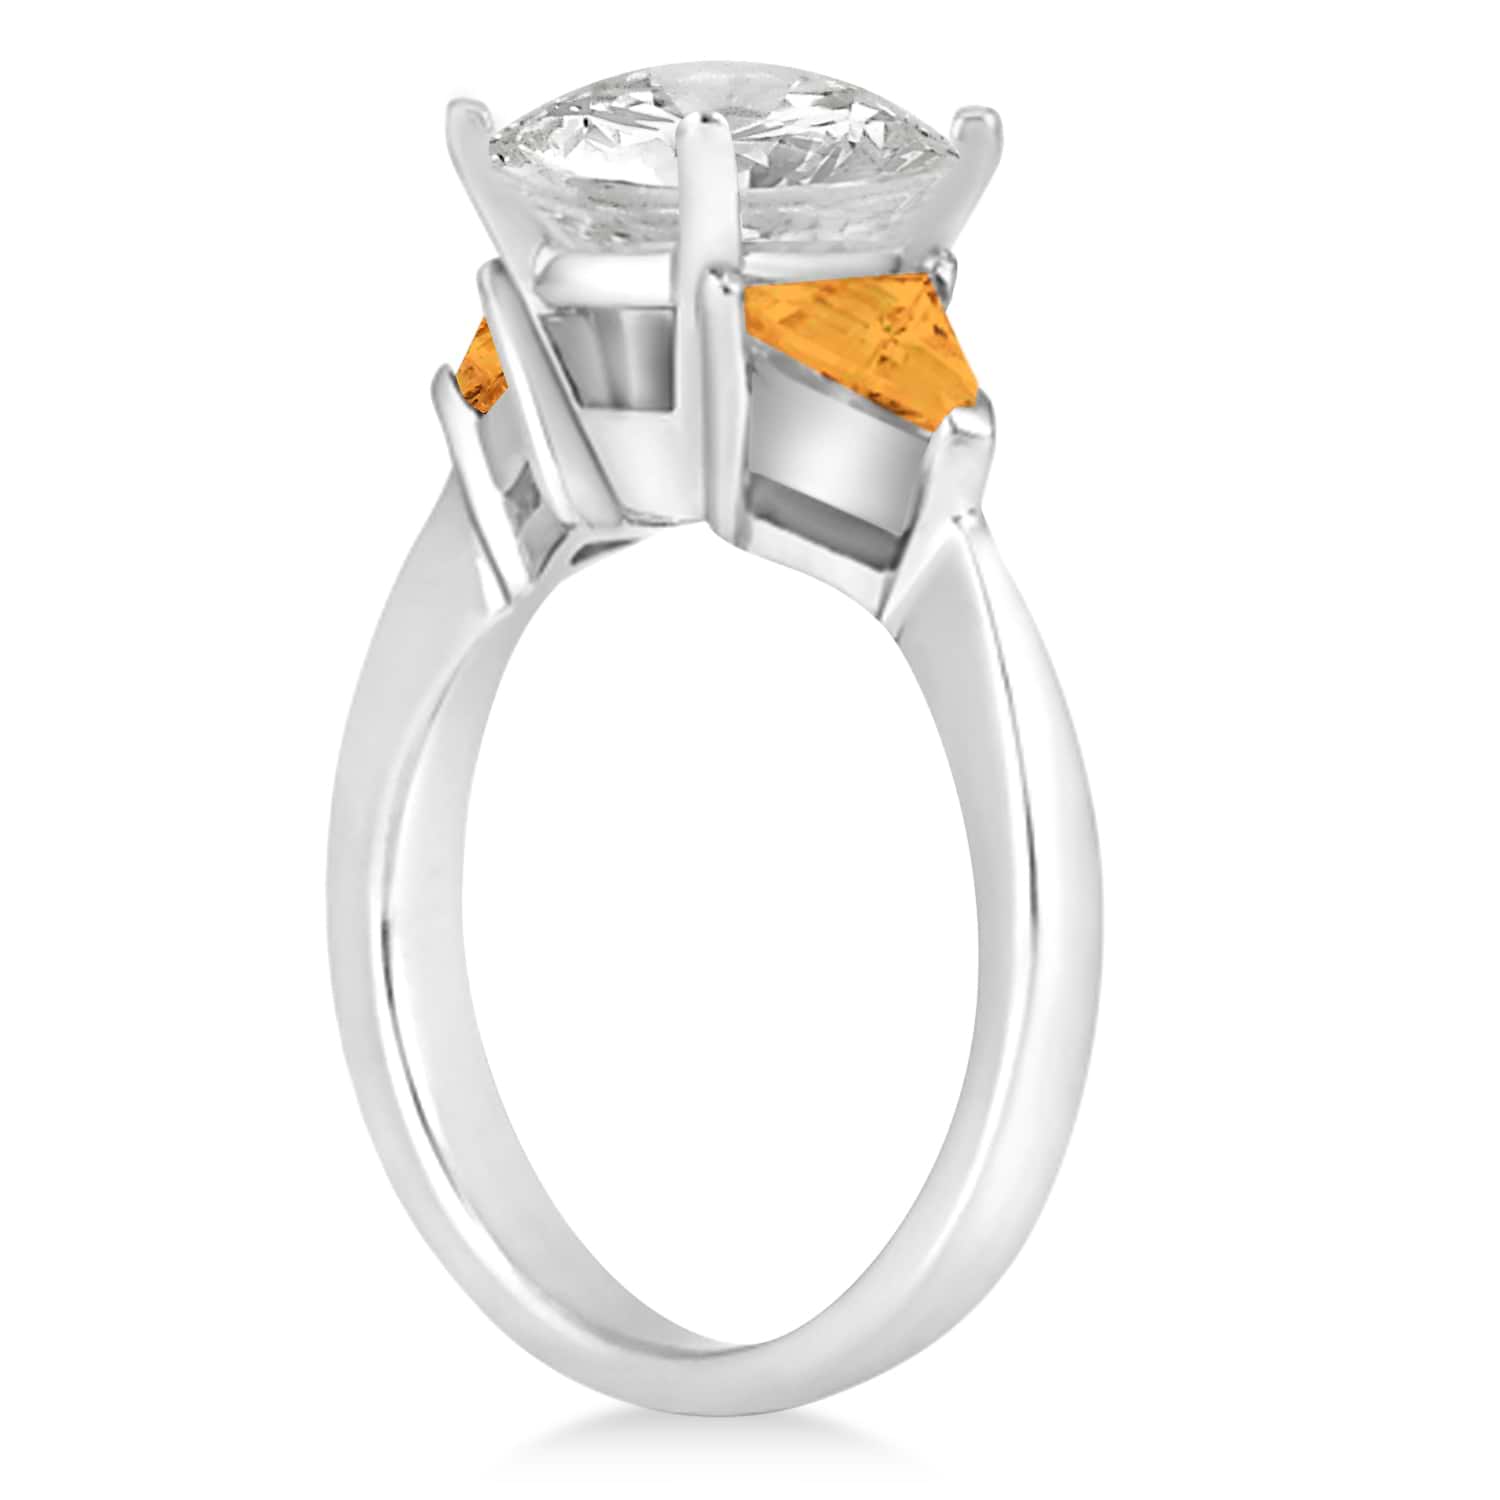 Citrine Three Stone Trilliant Engagement Ring 18k White Gold (0.70ct)